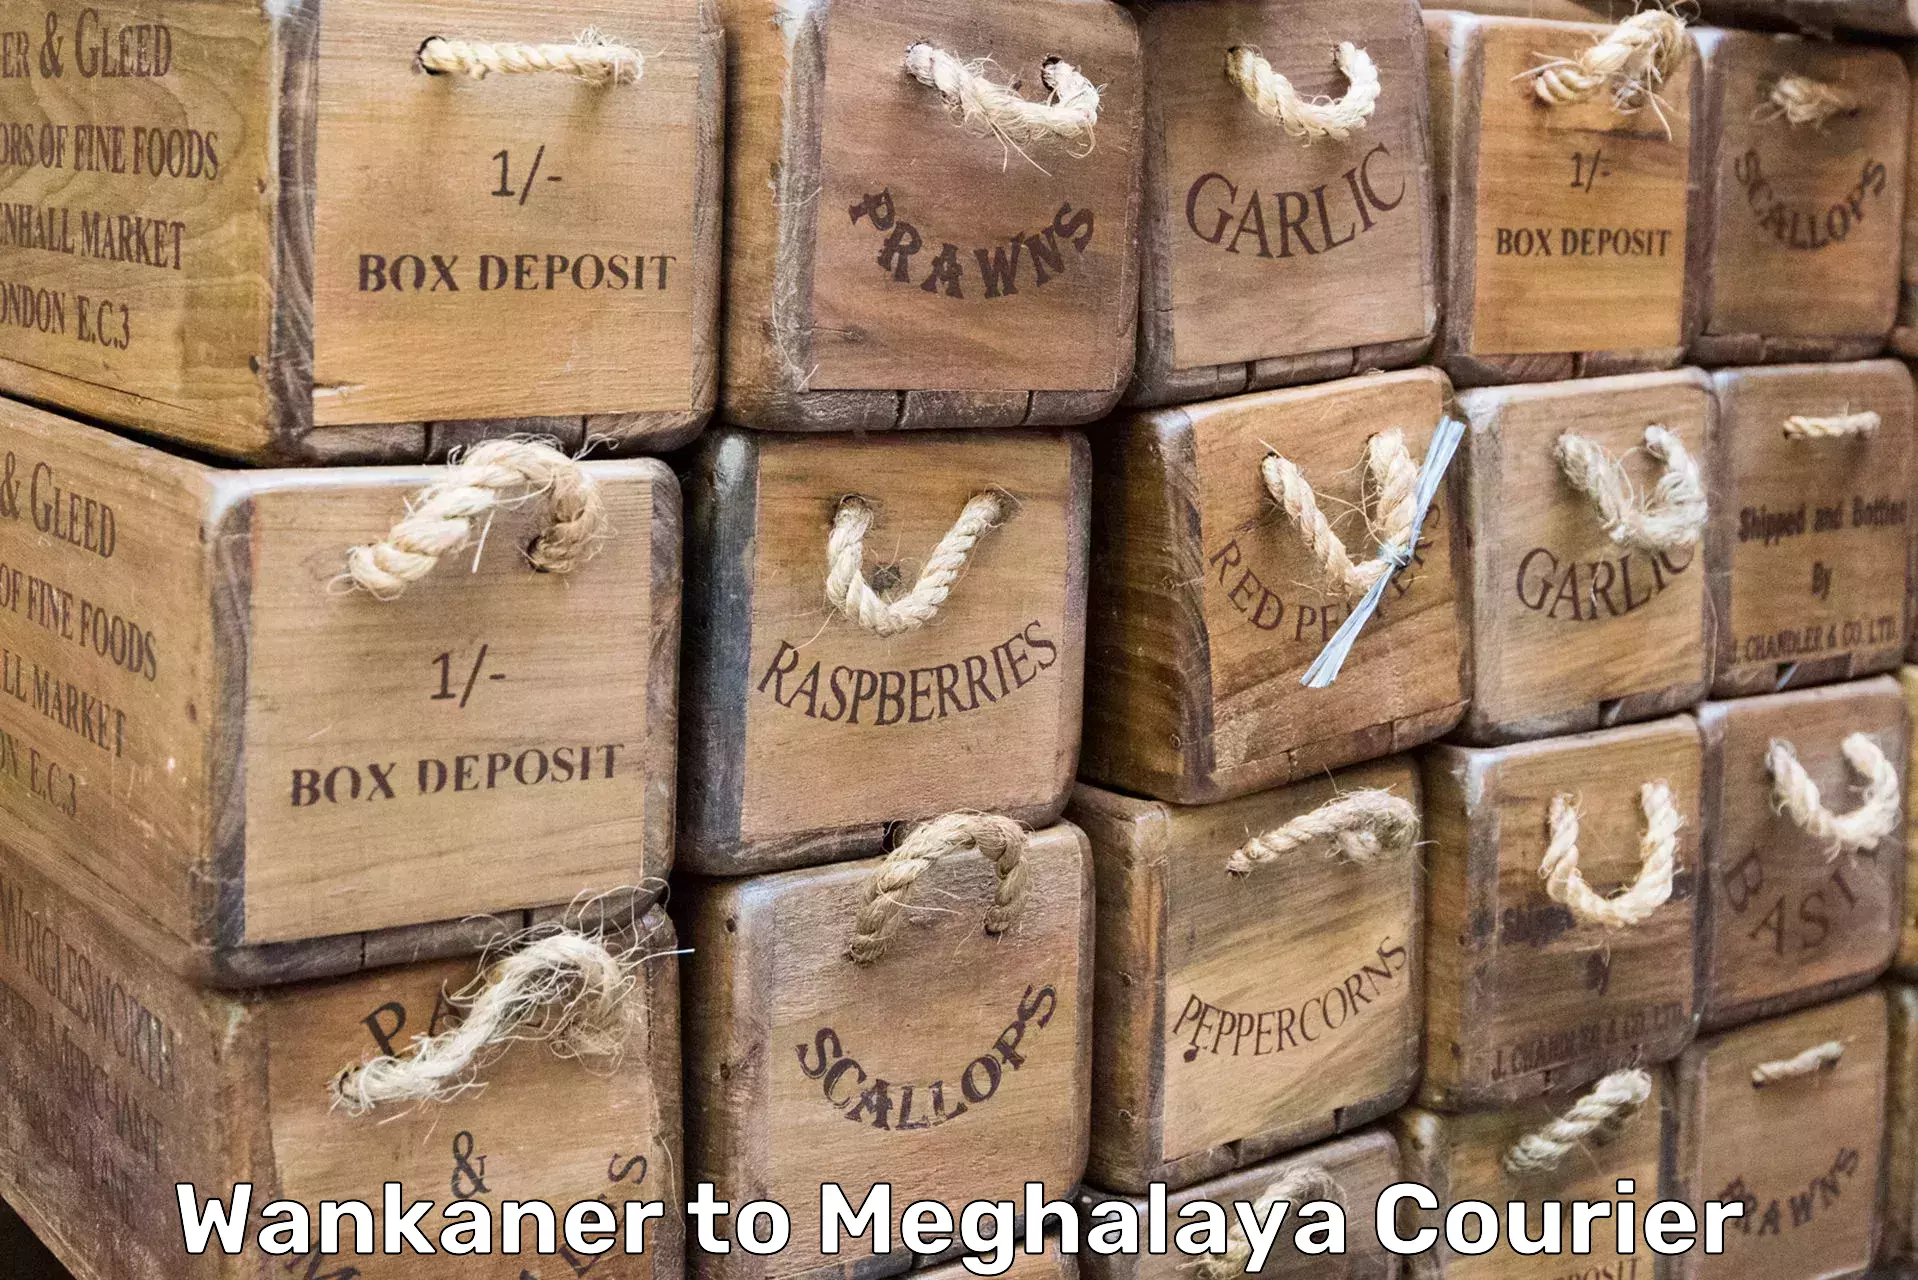 Moving and packing experts Wankaner to Meghalaya